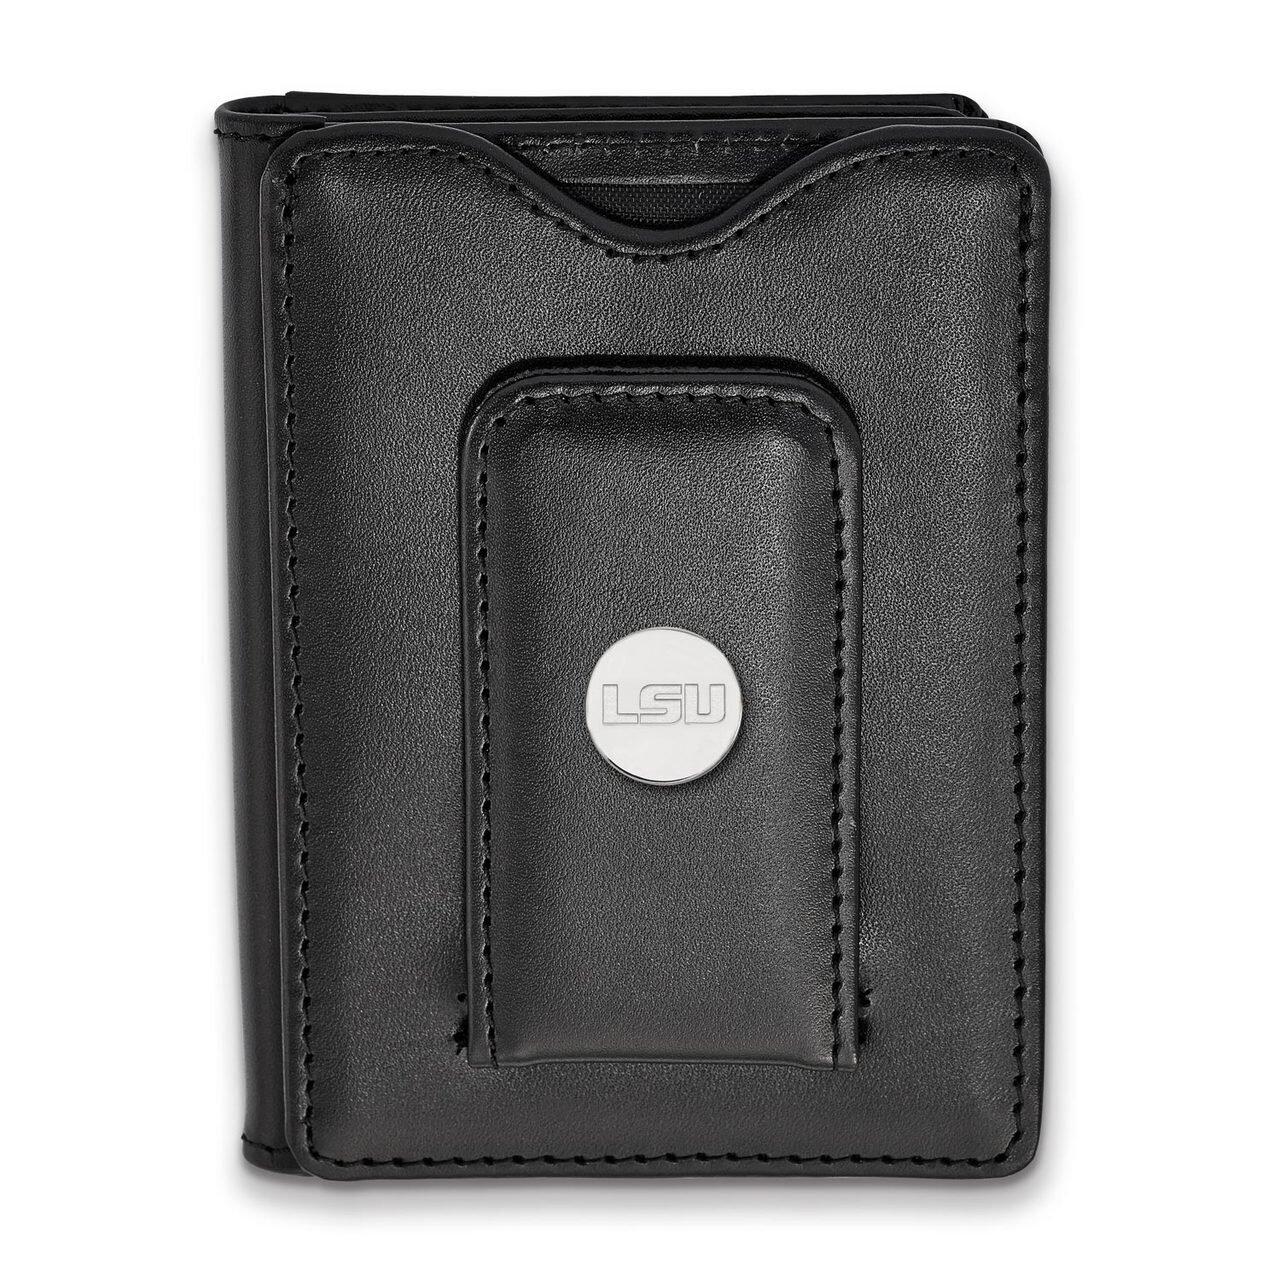 Louisiana State University Black Leather Wallet SS090LSU-W1